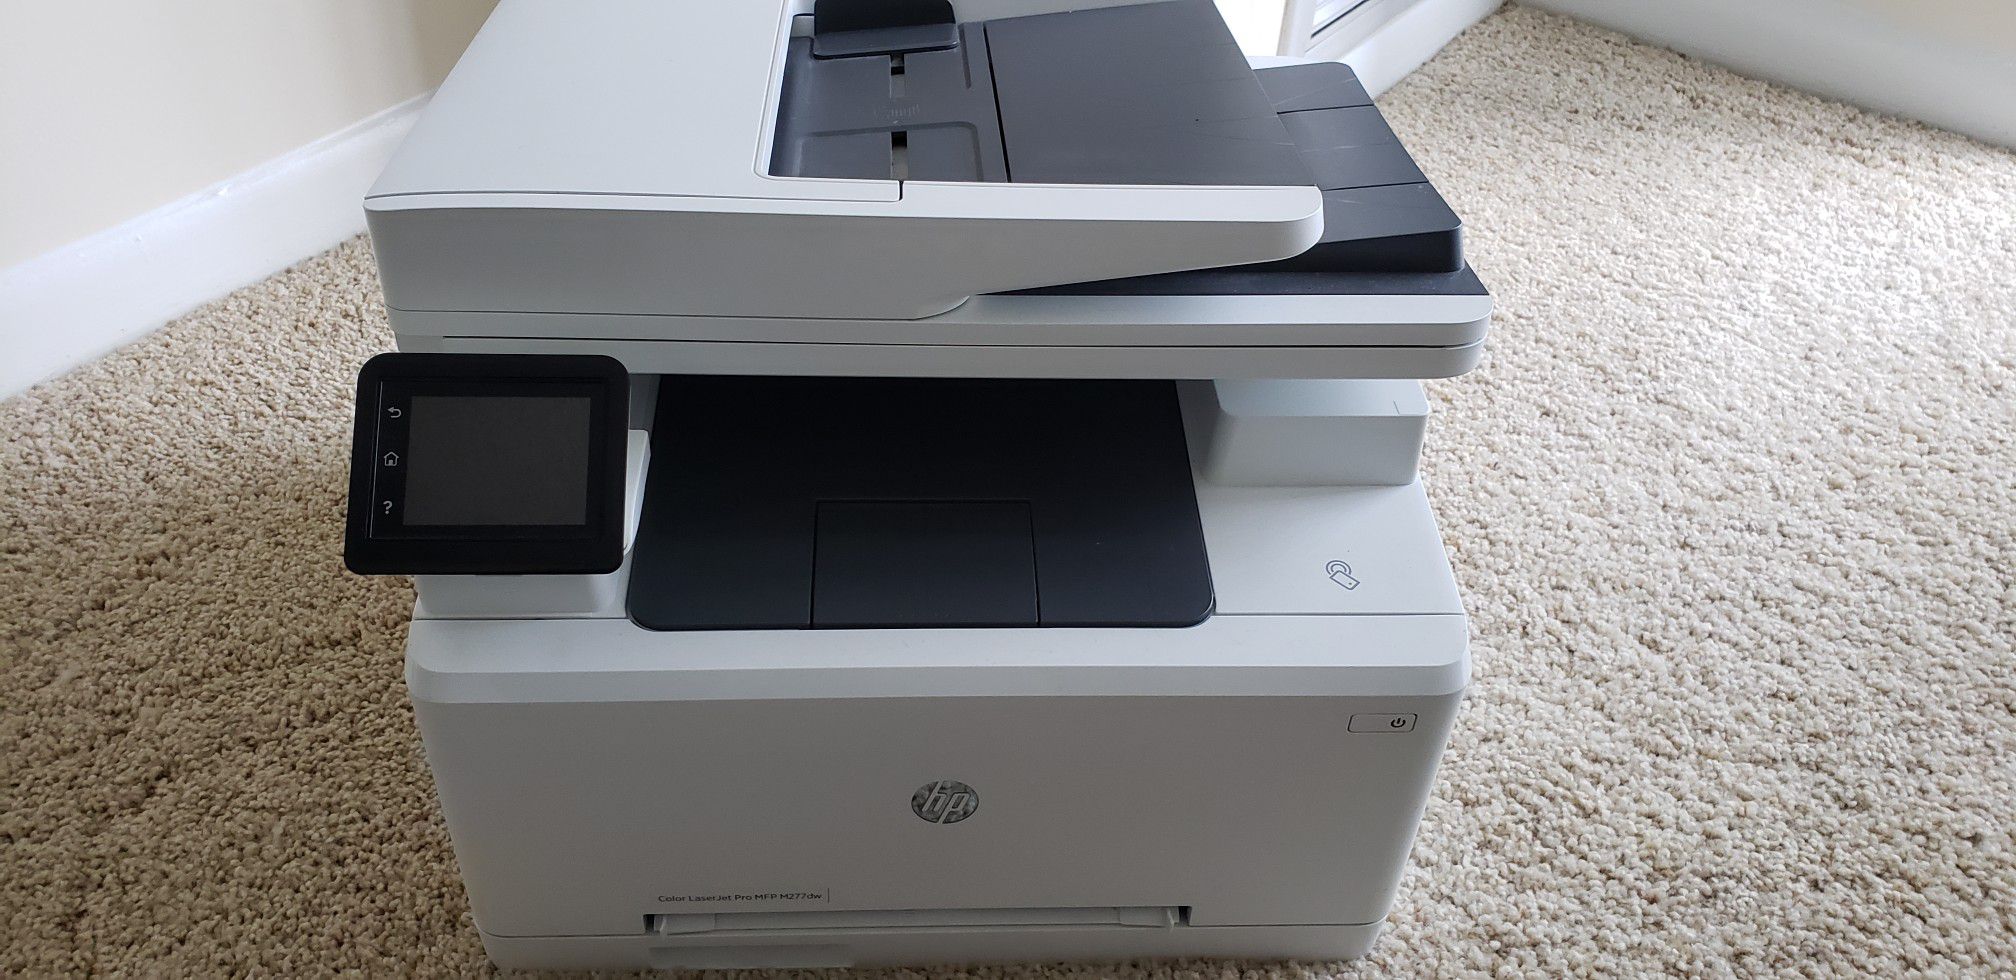 HP M277DW Color LaserJet MFP Printer